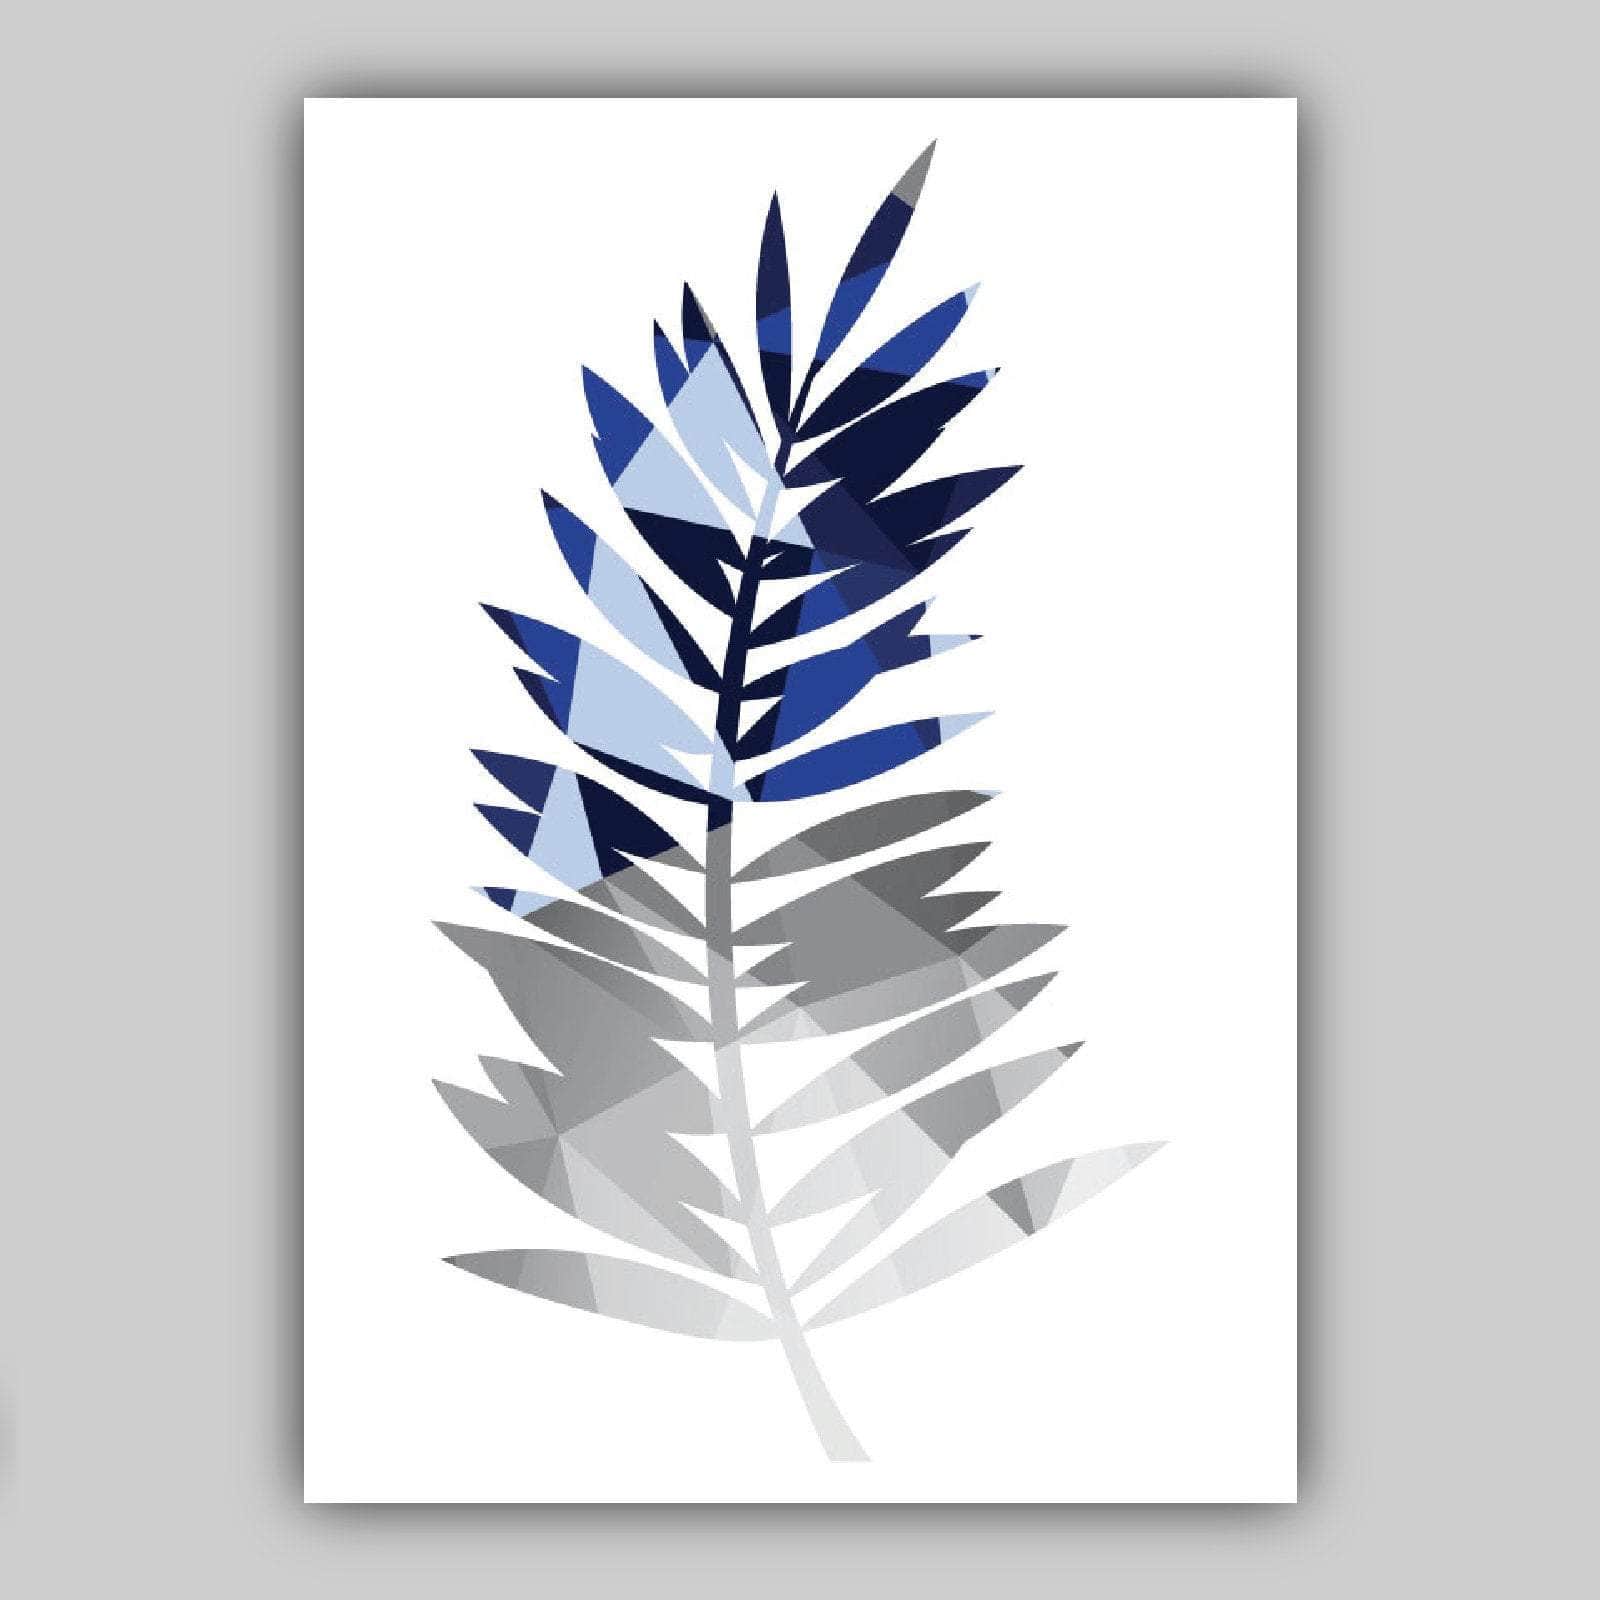 GEOMETRIC set of 3 NAVY Blue & Grey Art Prints Tropical LEAVES